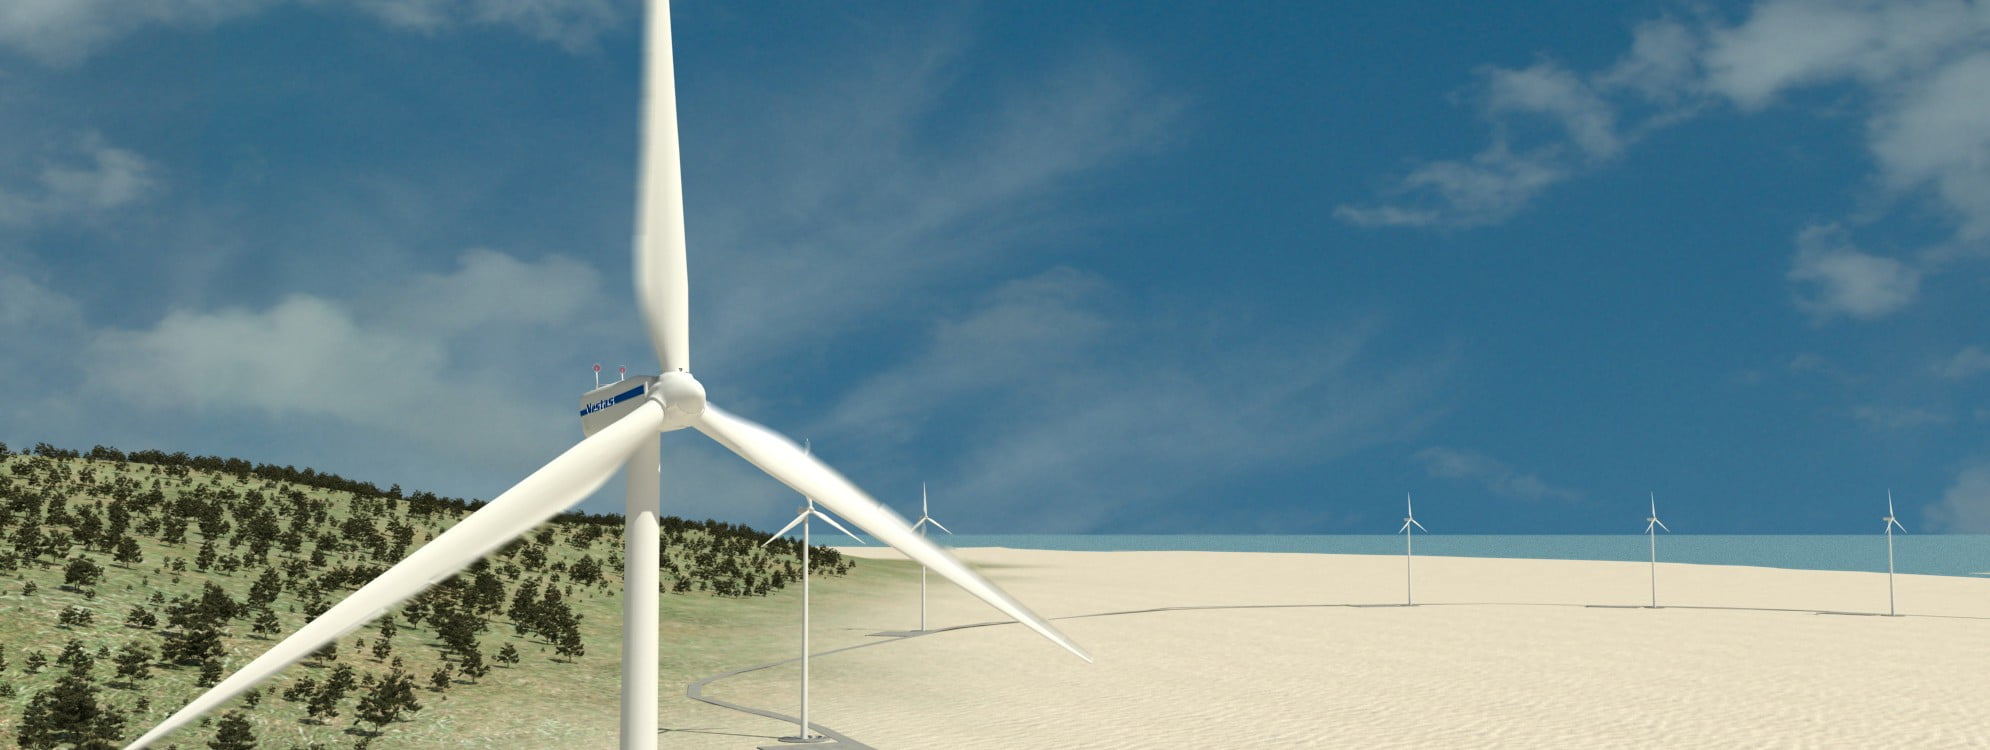 3D Model Of Wind Turbine E1446641222739 مجلة نقطة العلمية